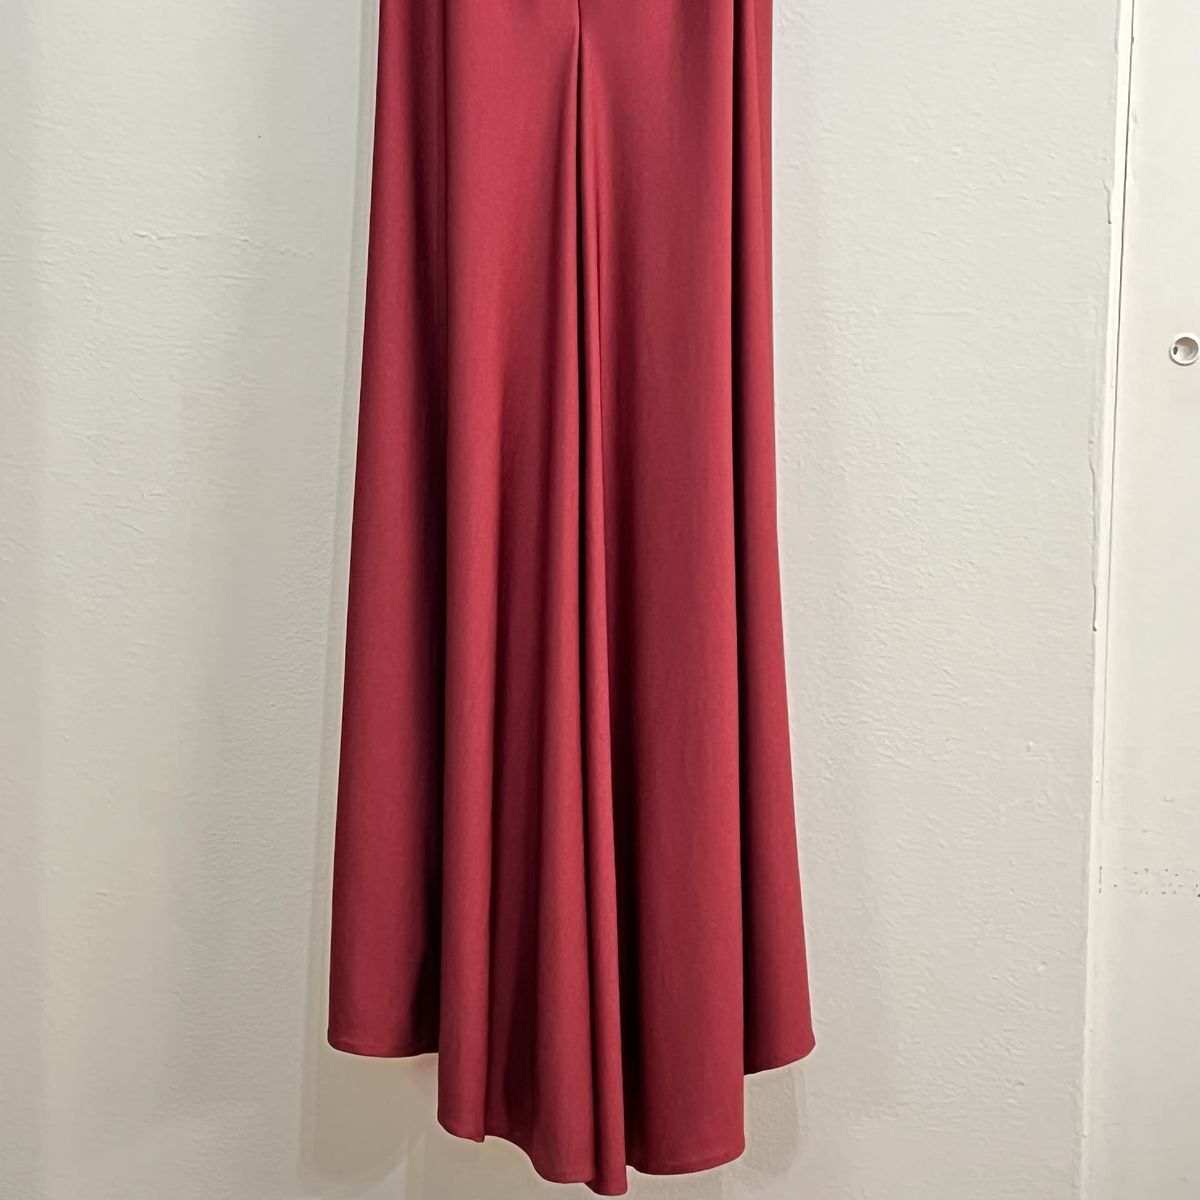 Style 28206 La Femme Size 10 Burgundy Red Side Slit Dress on Queenly